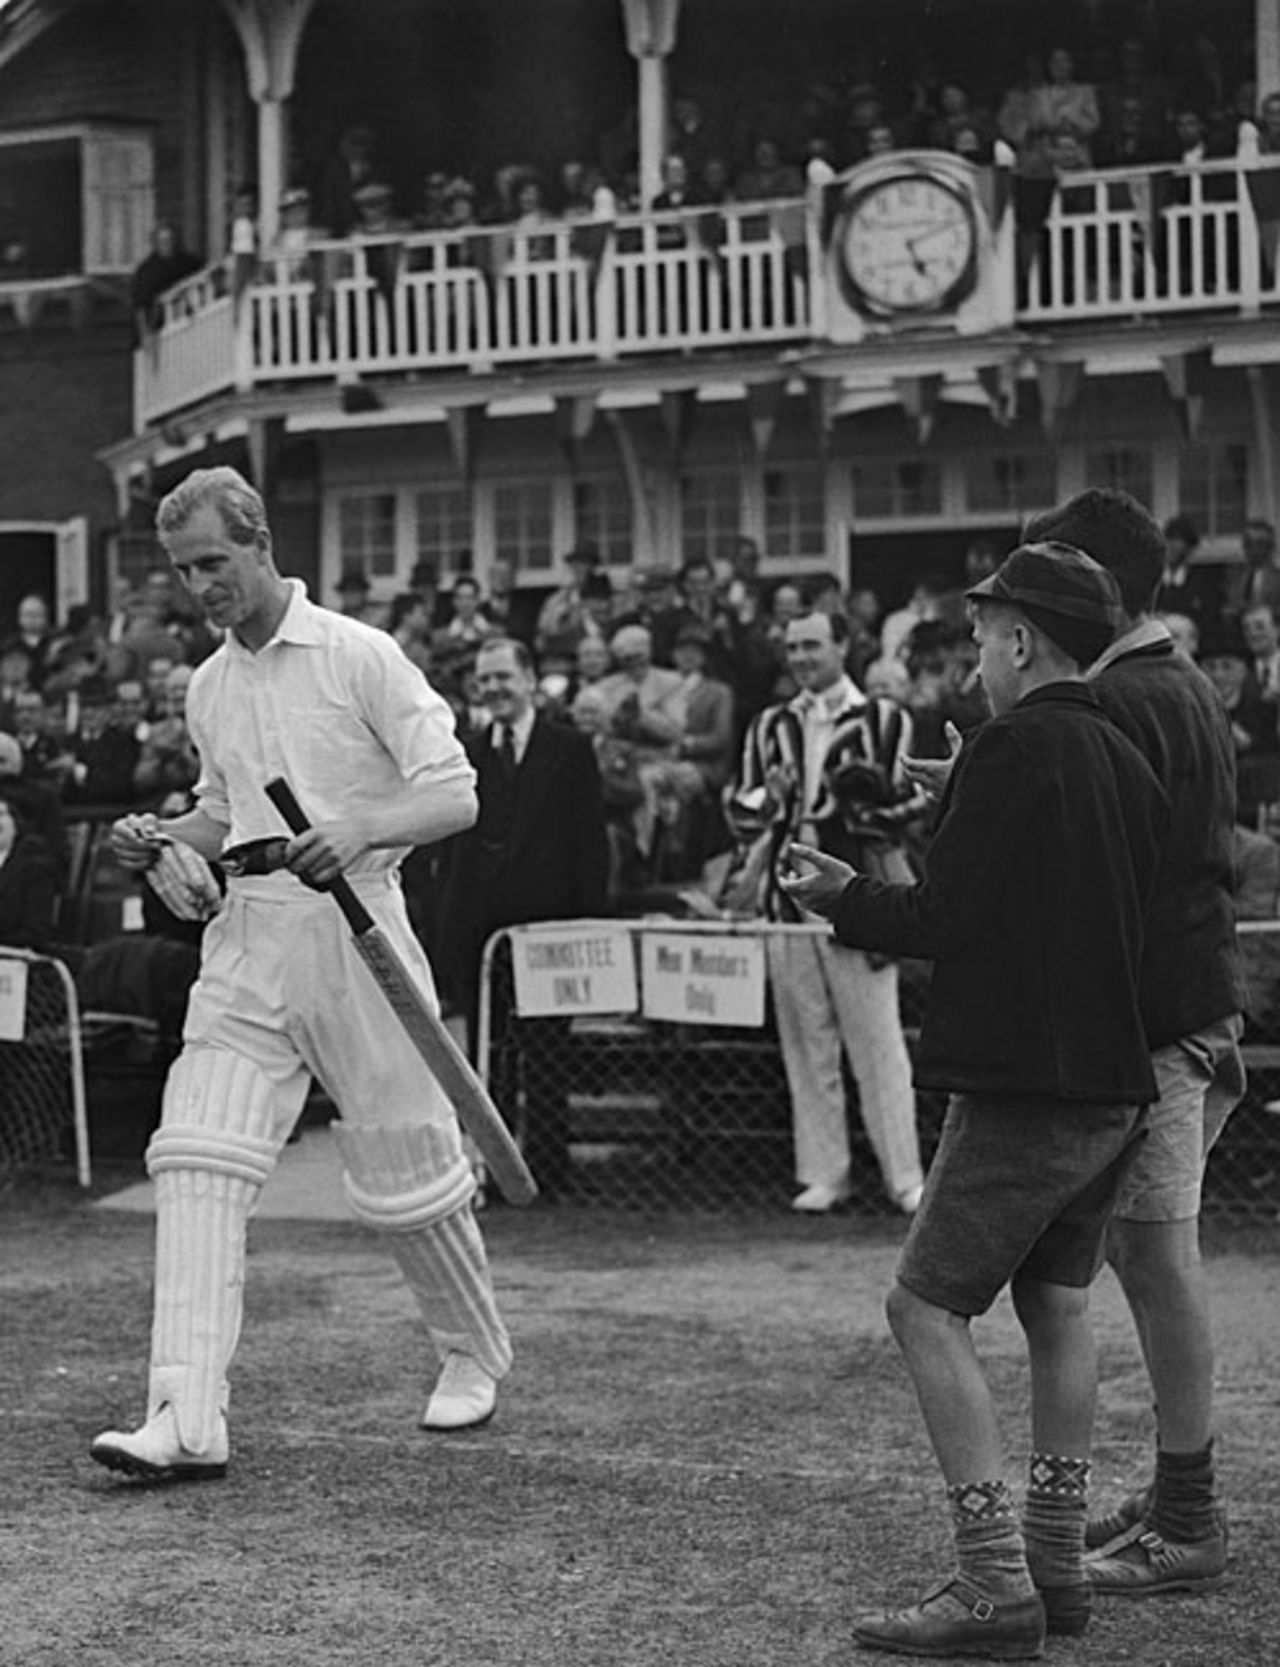 Prince Philip goes out to bat, Duke of Edinburgh v Hampshire, Bournemouth, September 20, 1949